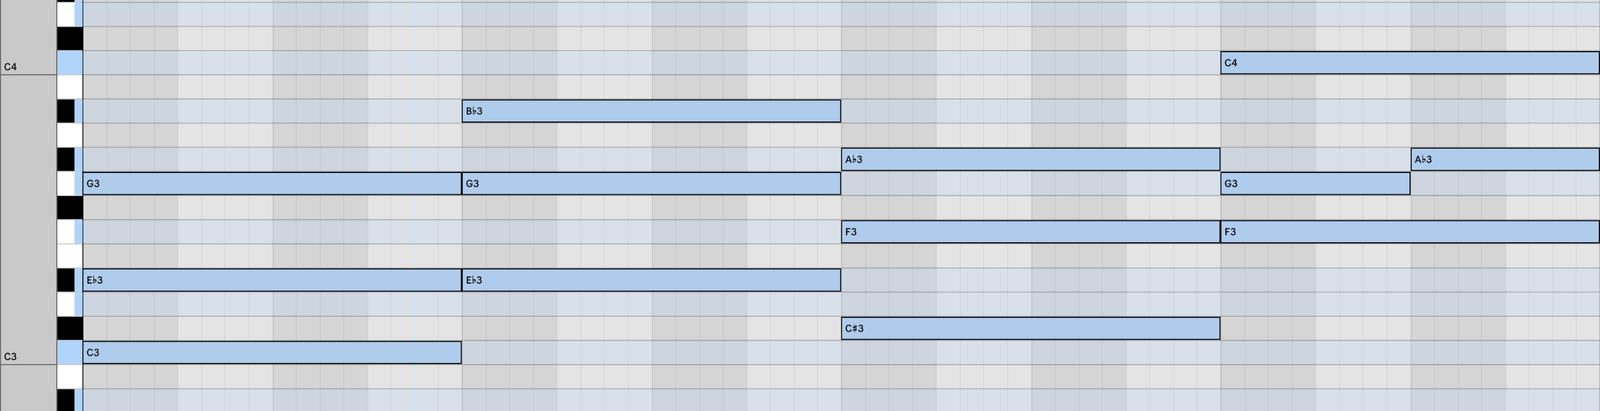 chord progression (VI VII v i)